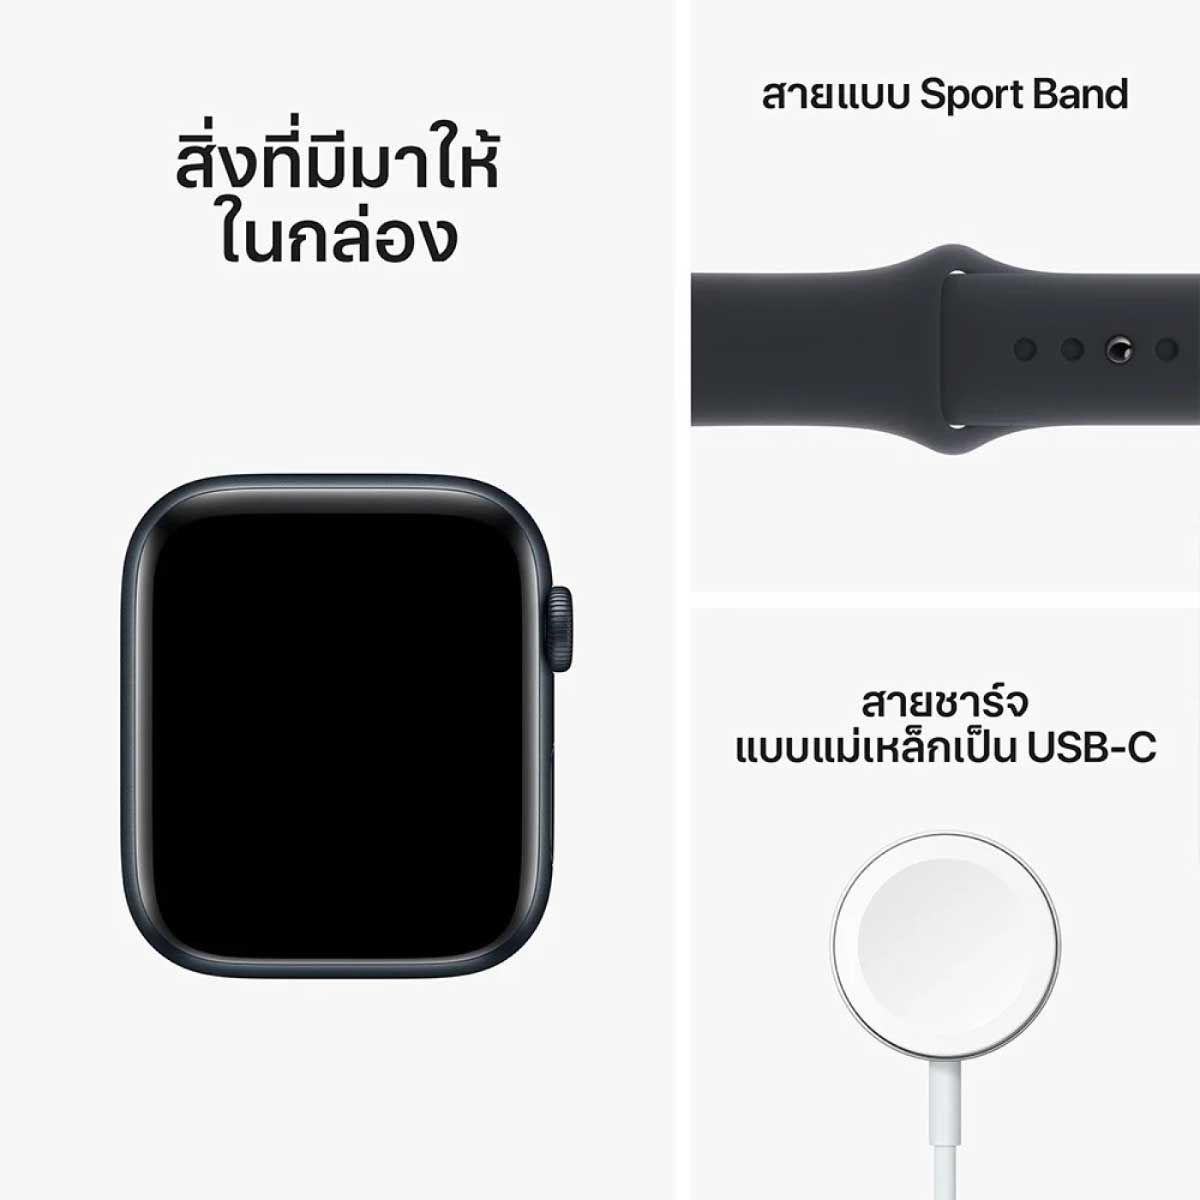 Apple Watch SE  Midnight  44mm  GPS  Aluminium Case Sport Band